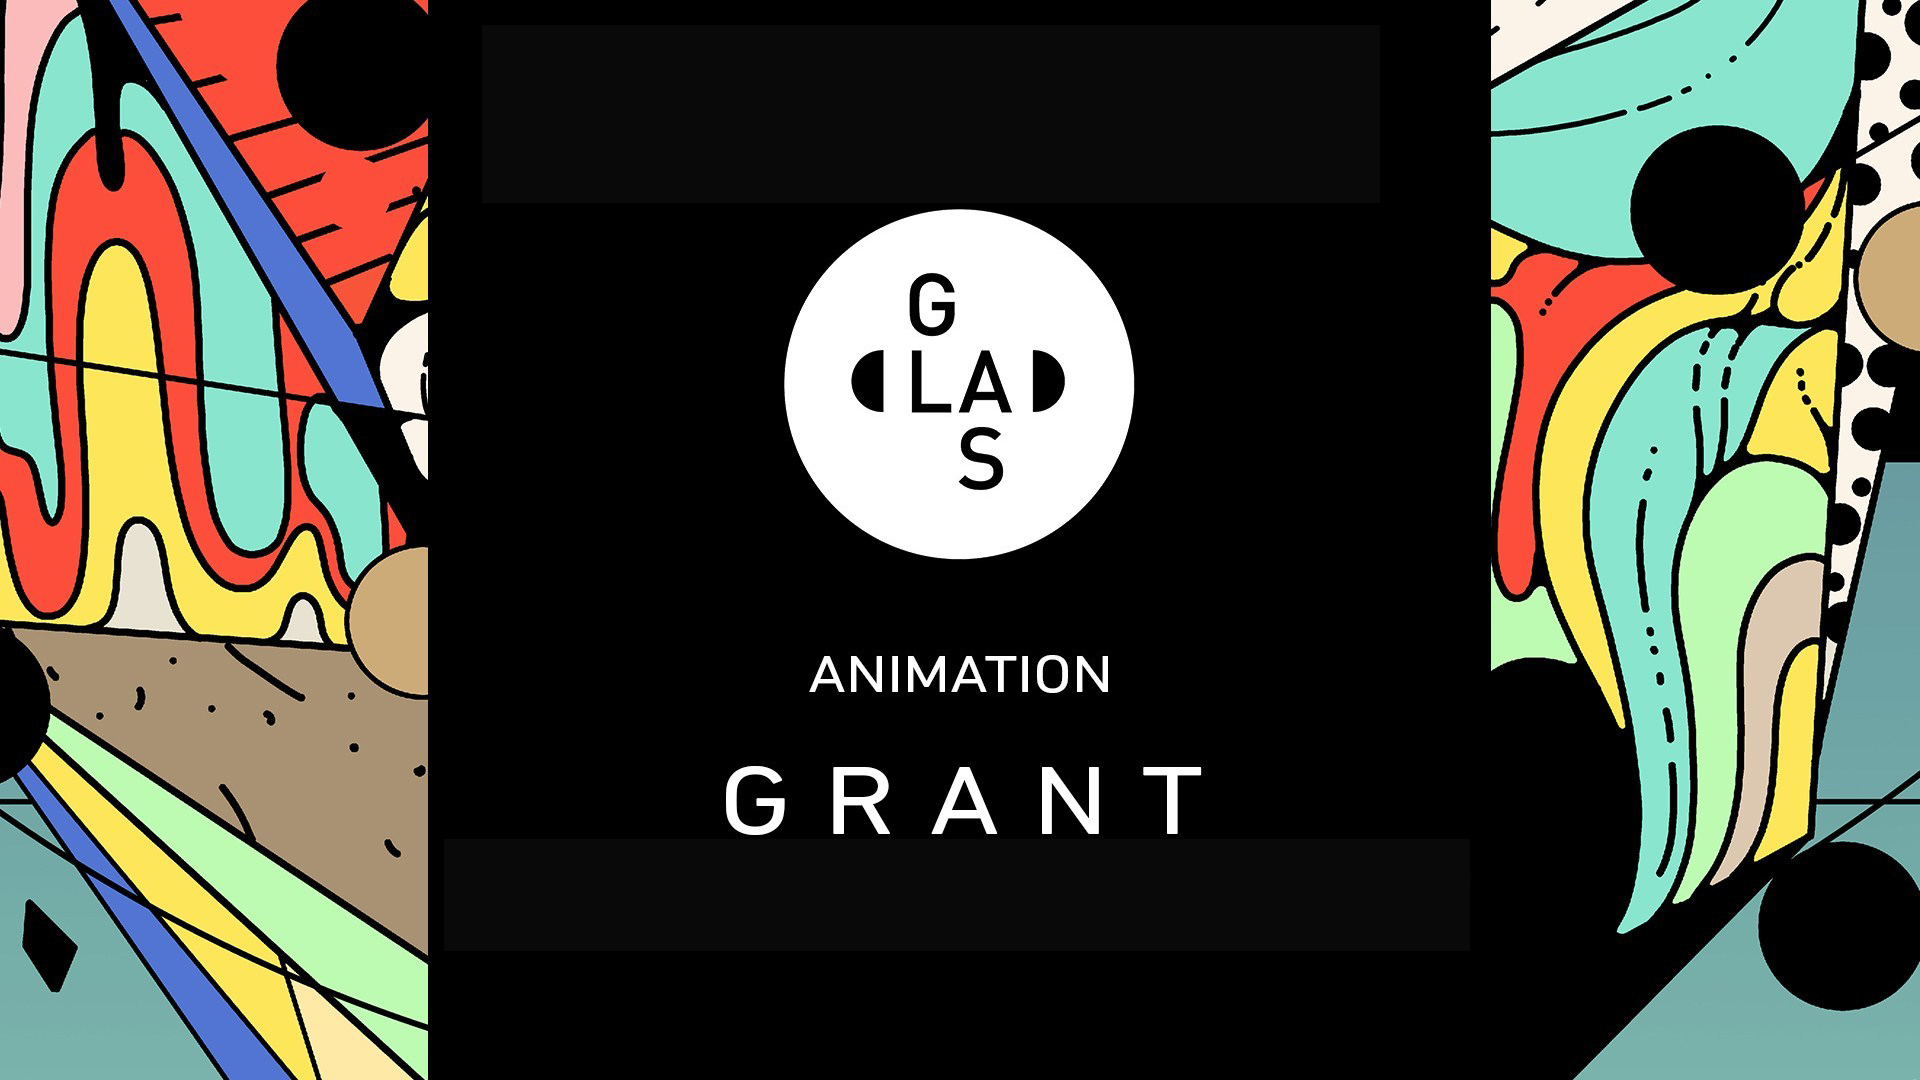 GRANT GLAS Animation